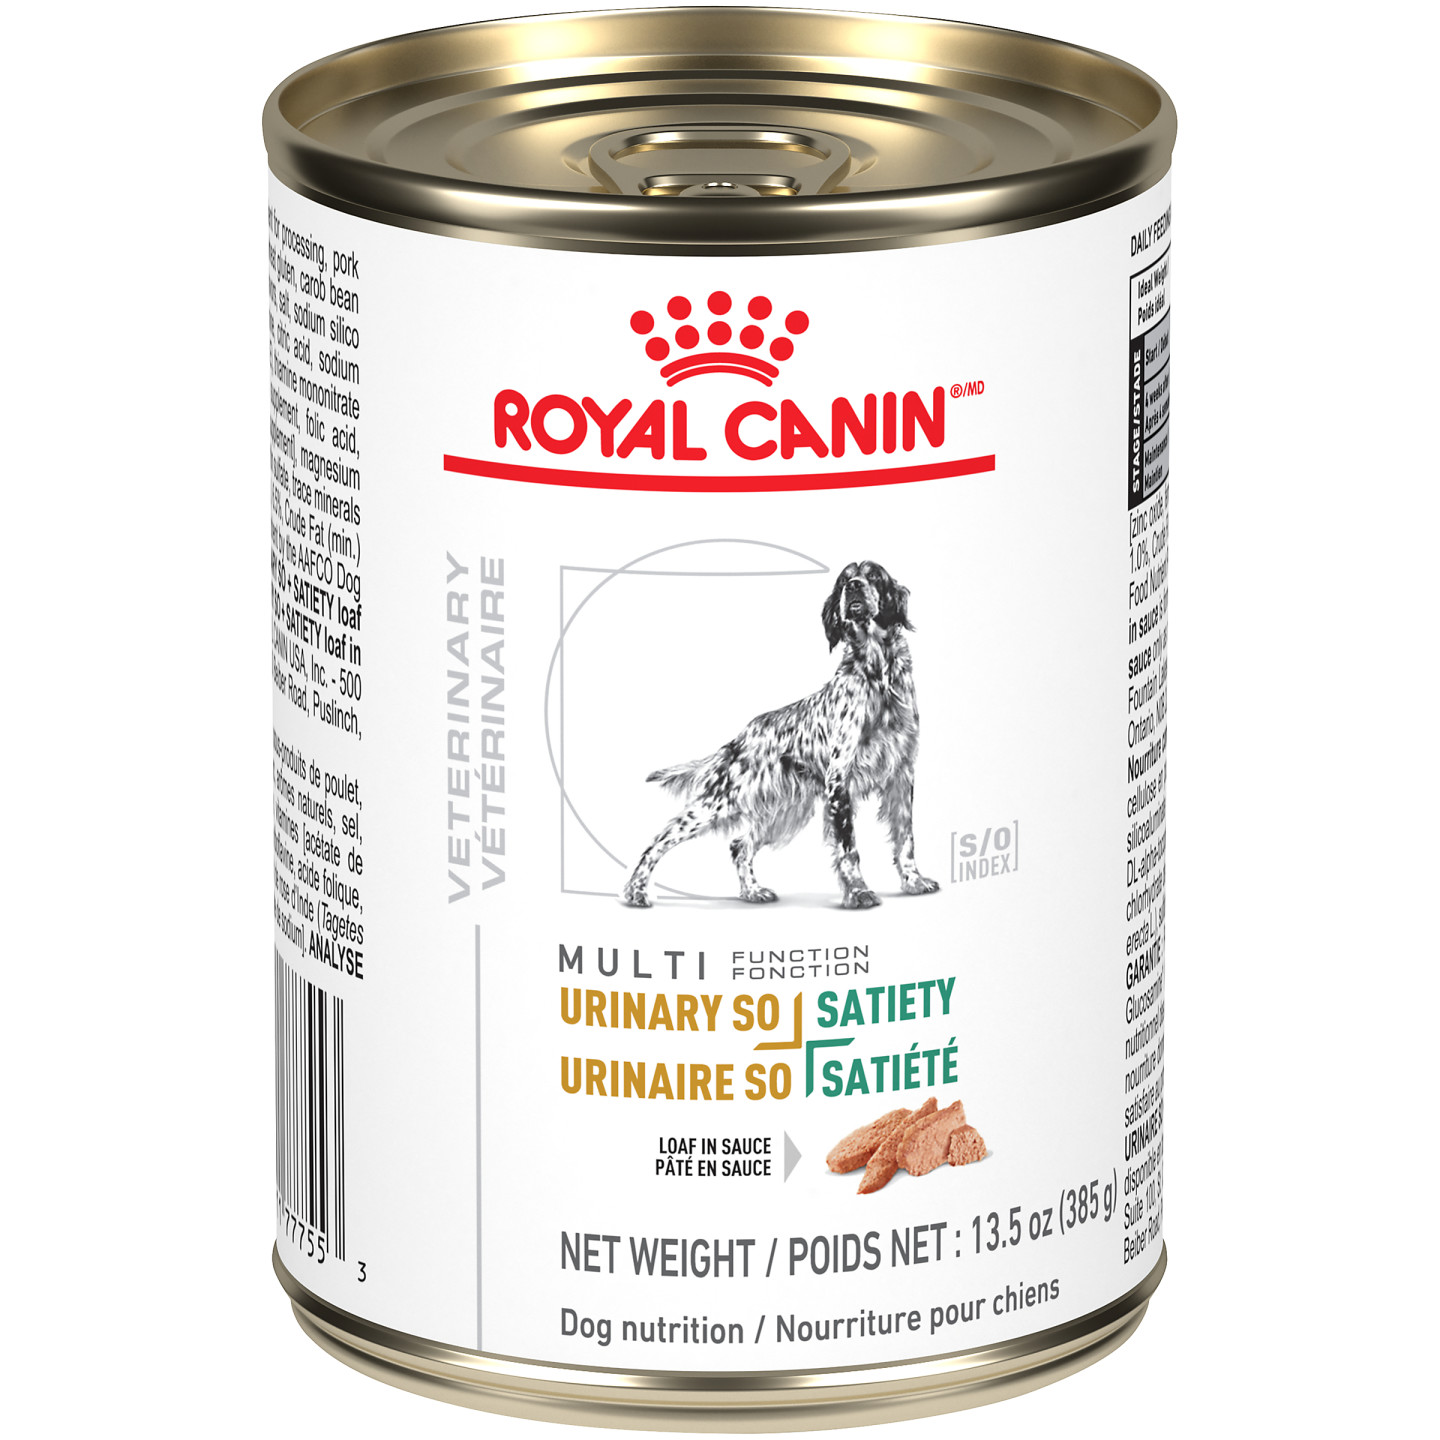 Urinary Dog Food Royal Canin